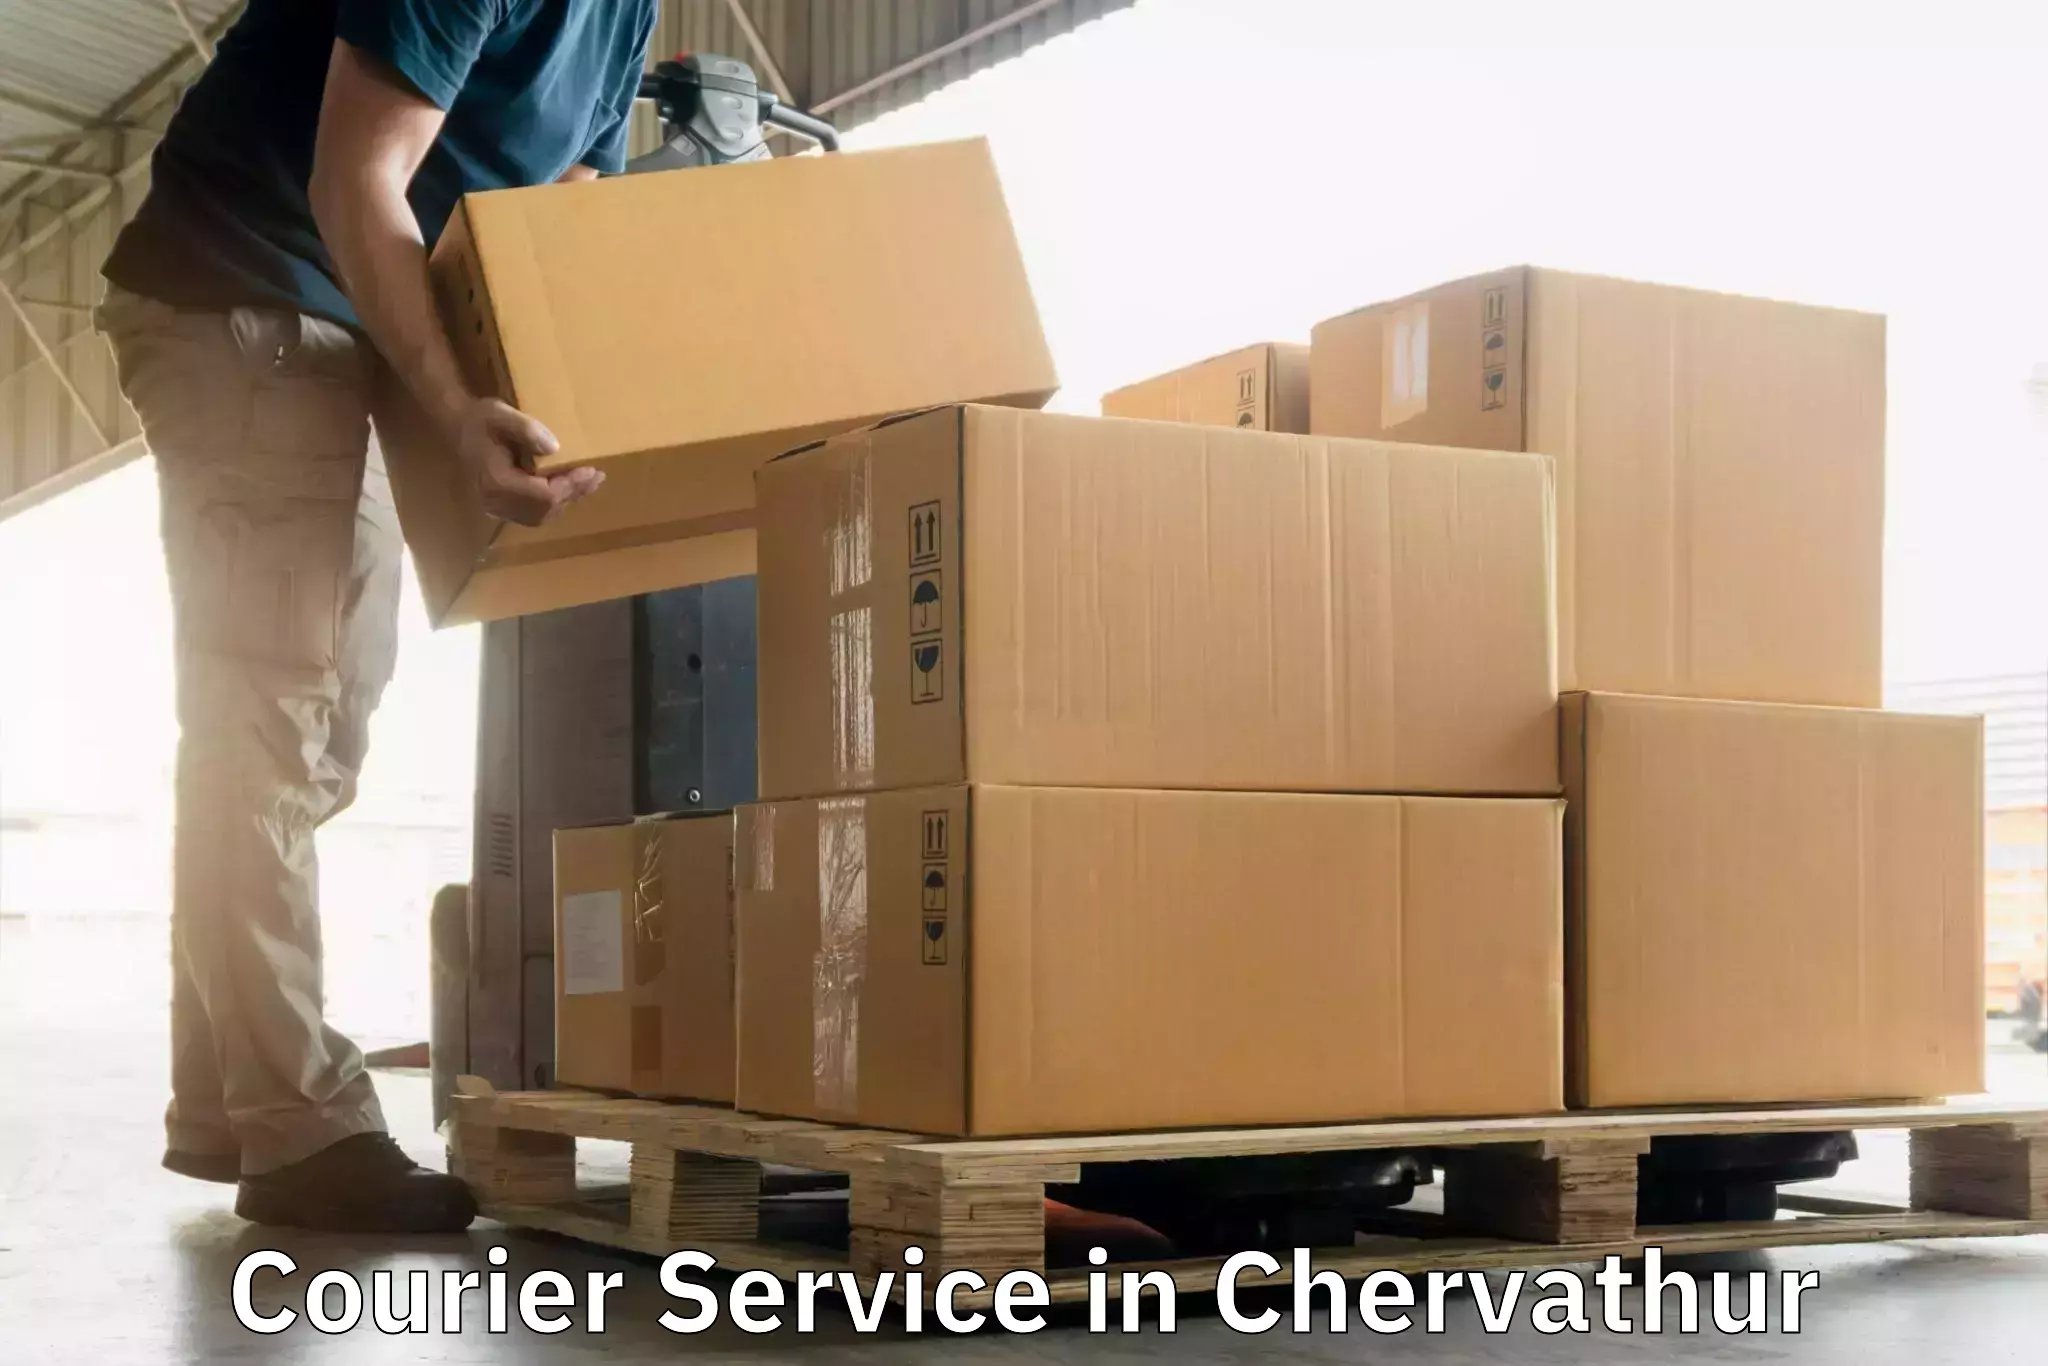 Logistics management in Chervathur